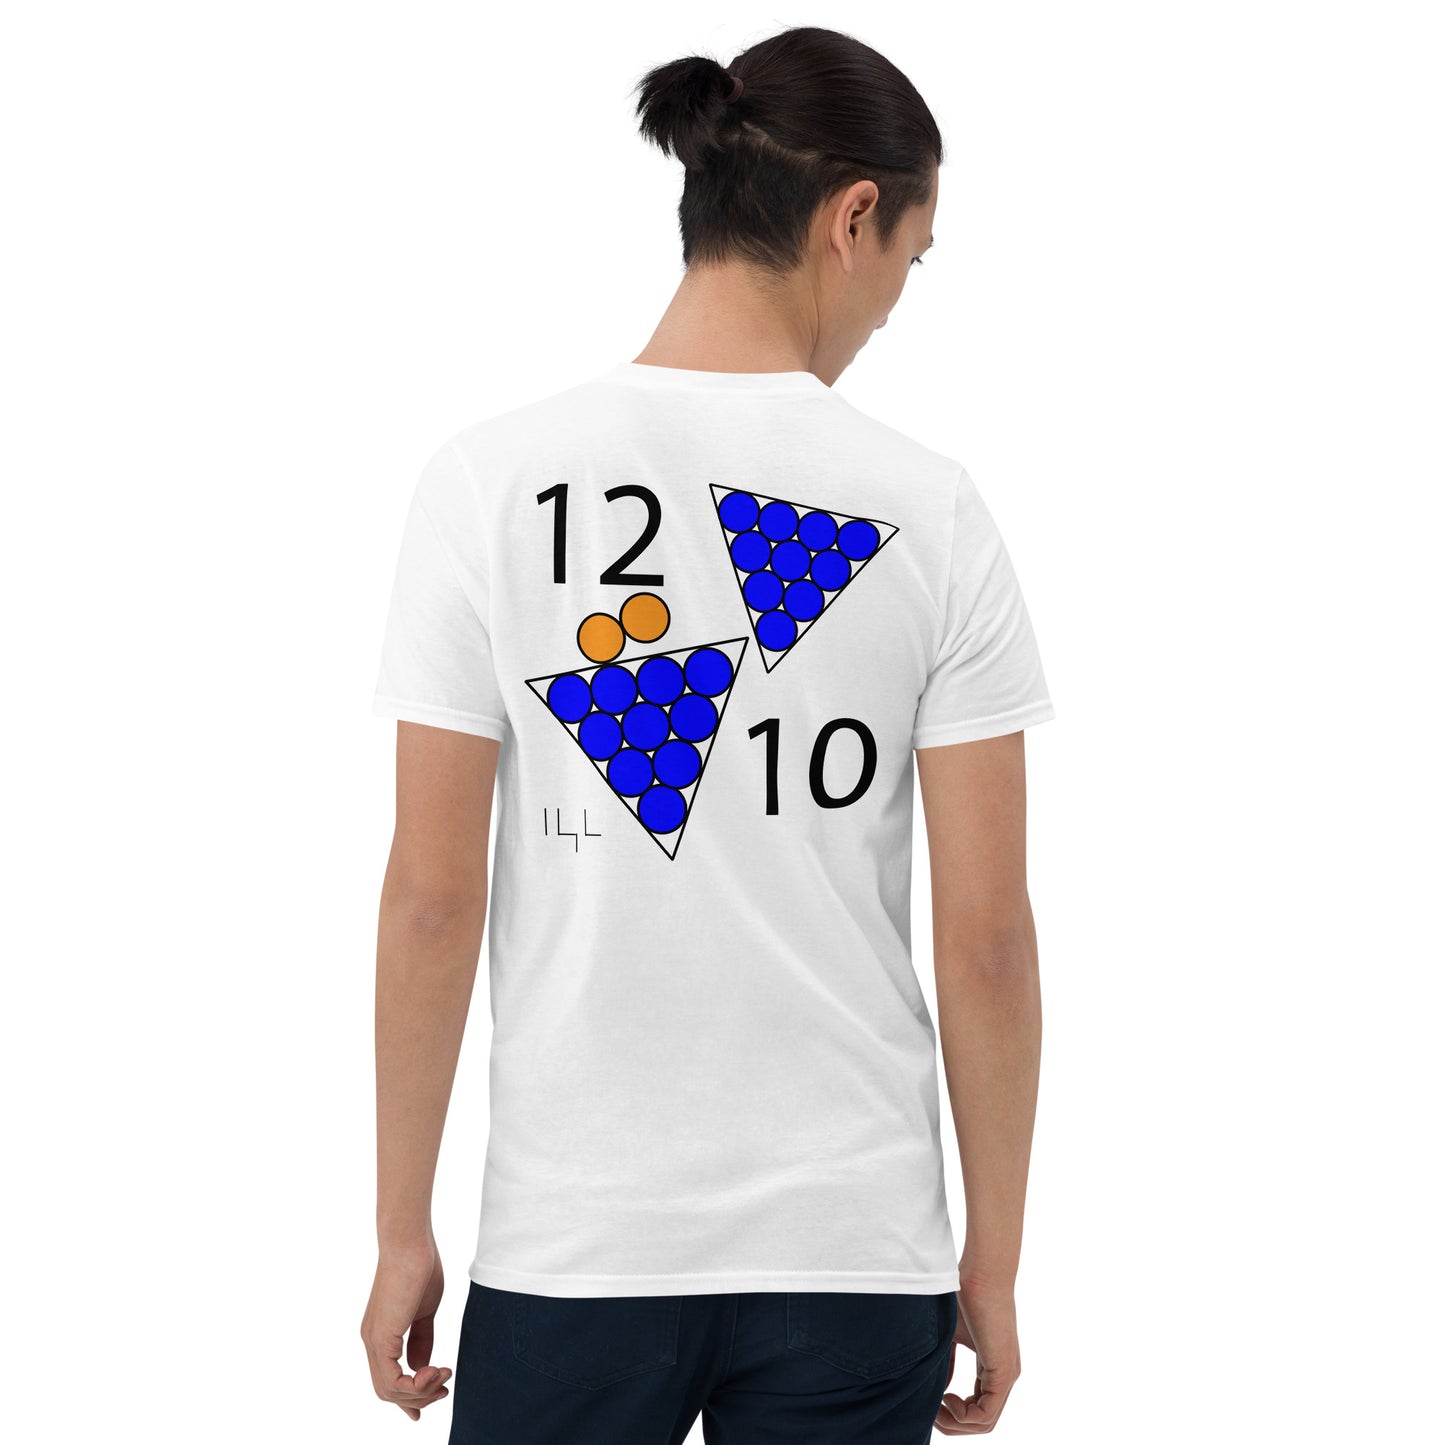 December 10th Blue T-Shirt at 12:10 1210